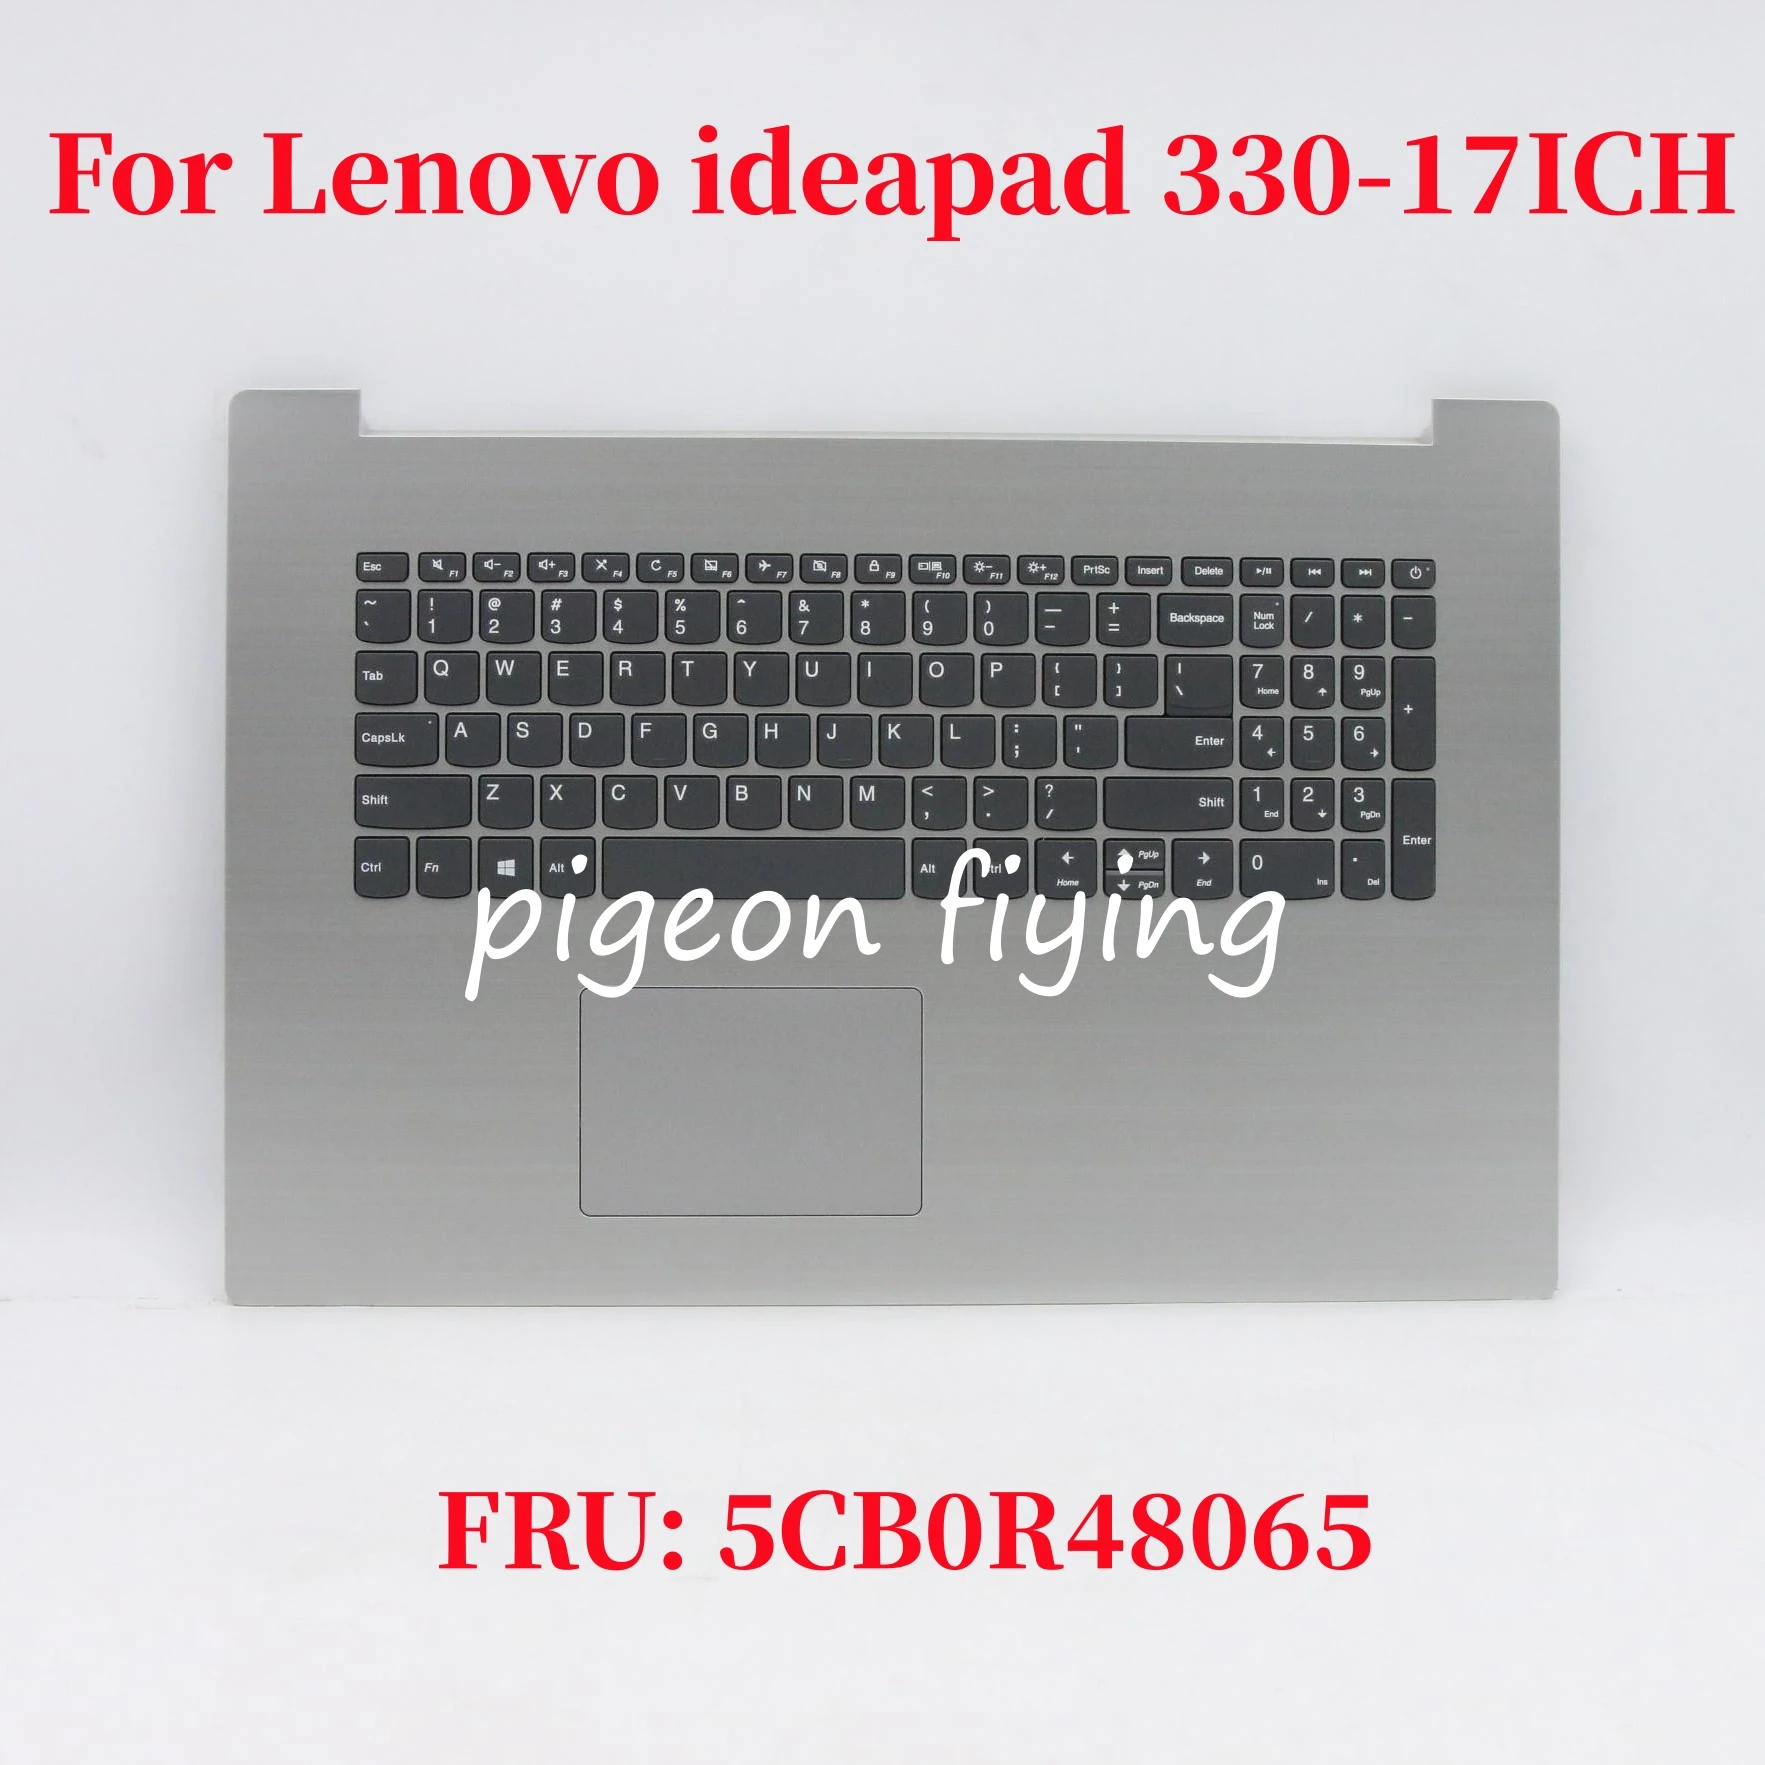 

For Lenovo ideapad 330-17ICH Notebook Computer Keyboard FRU: 5CB0R48065